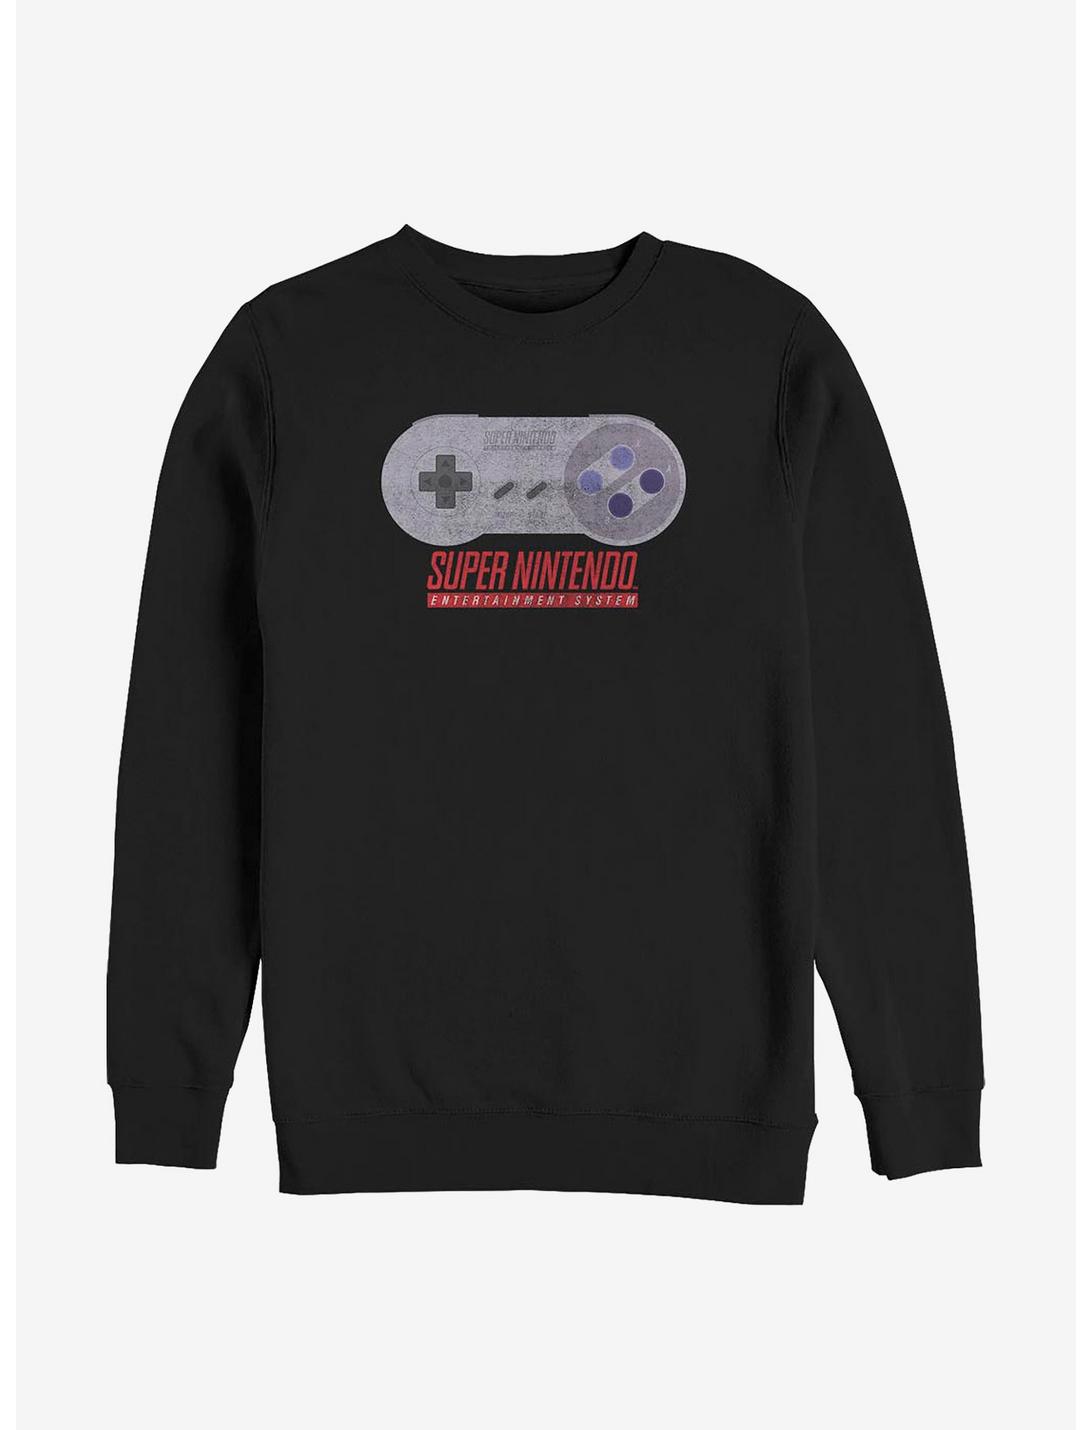 Nintendo Super Nintendo Classic Controller Crew Sweatshirt, BLACK, hi-res